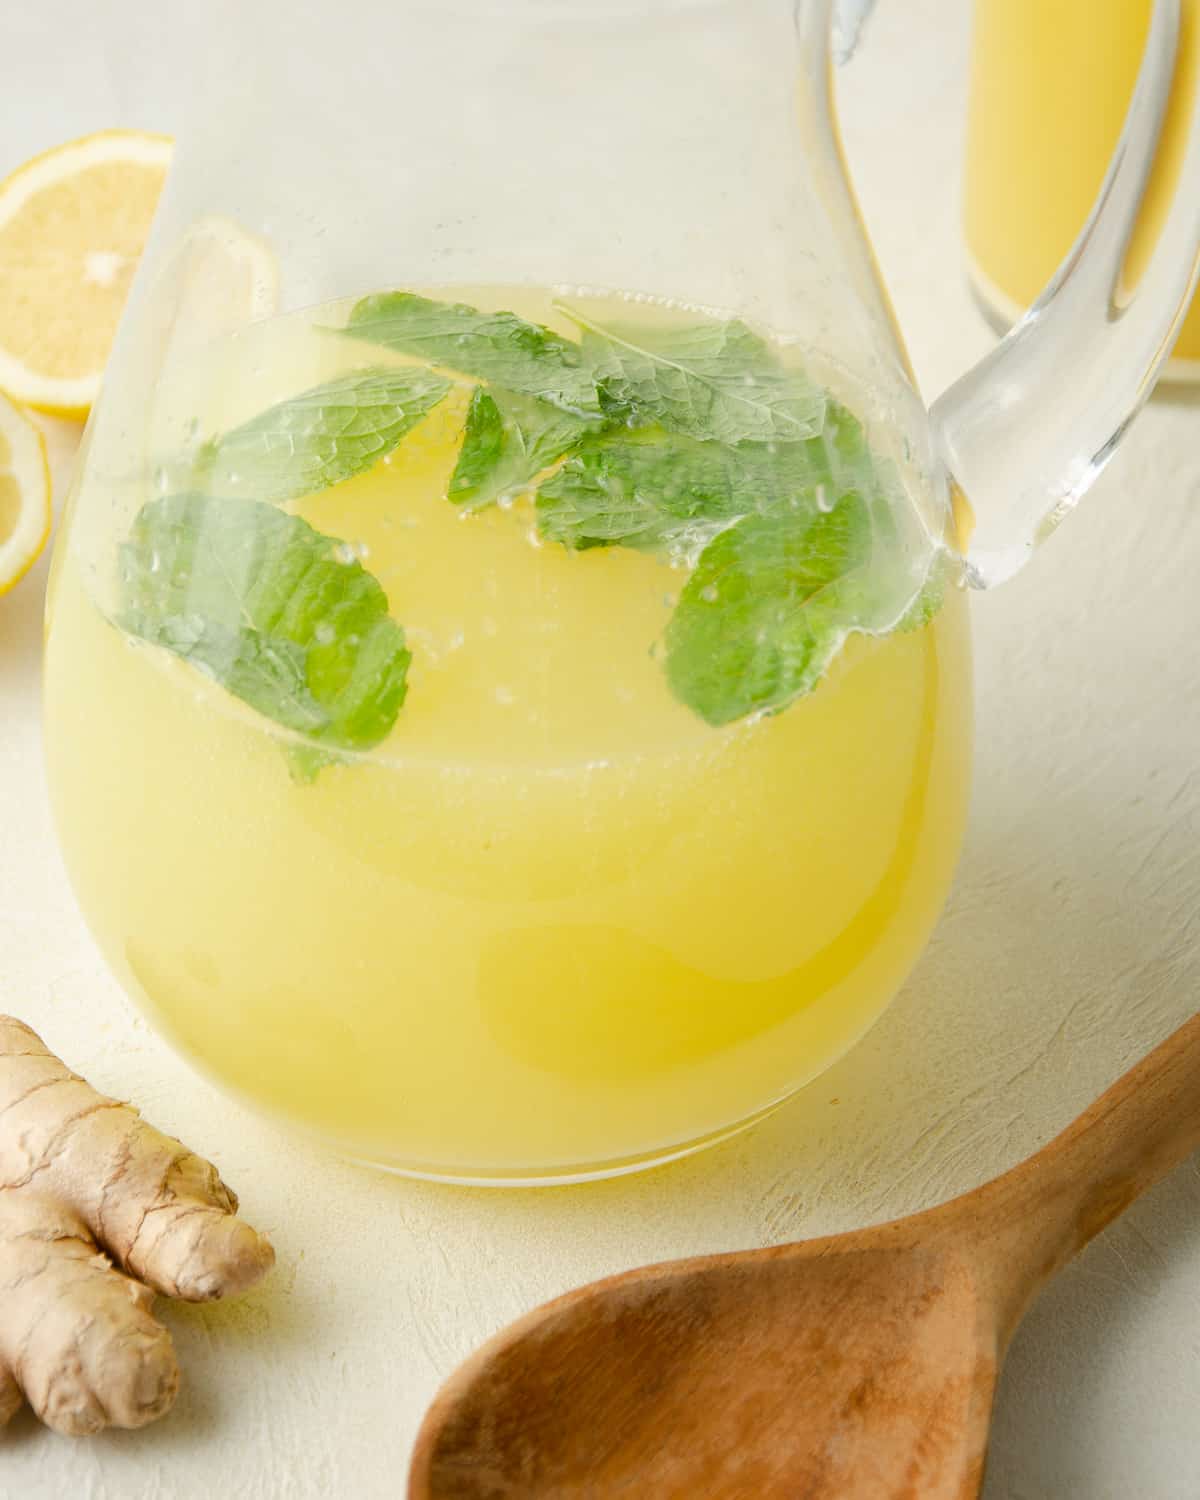 Fresh mint leaves in ginger lemonade a glass pitcher.